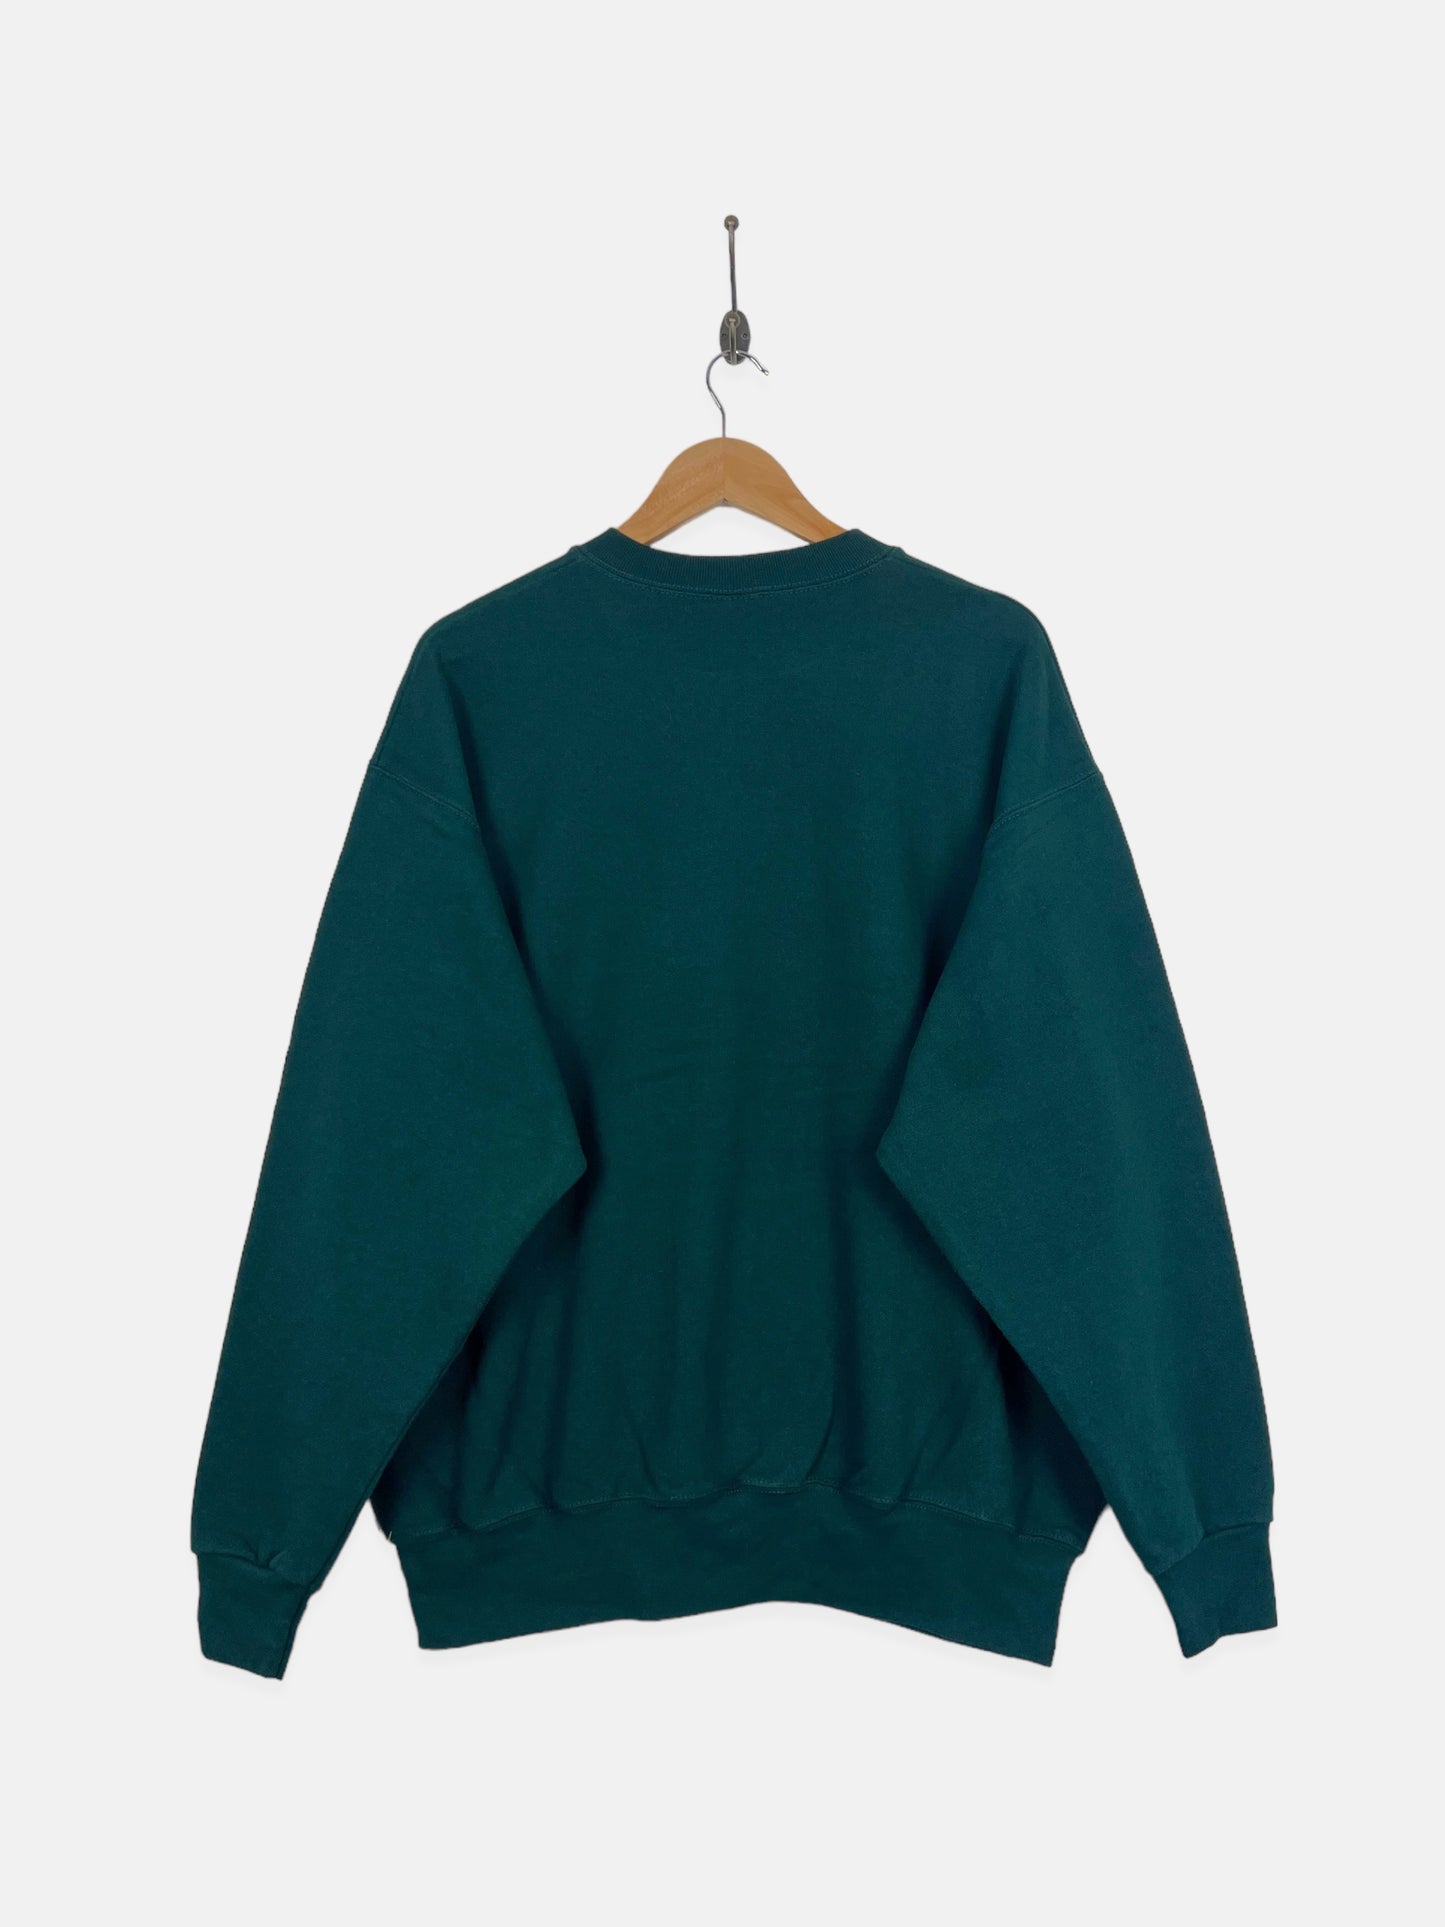 90's Green Vintage Sweatshirt Size XL